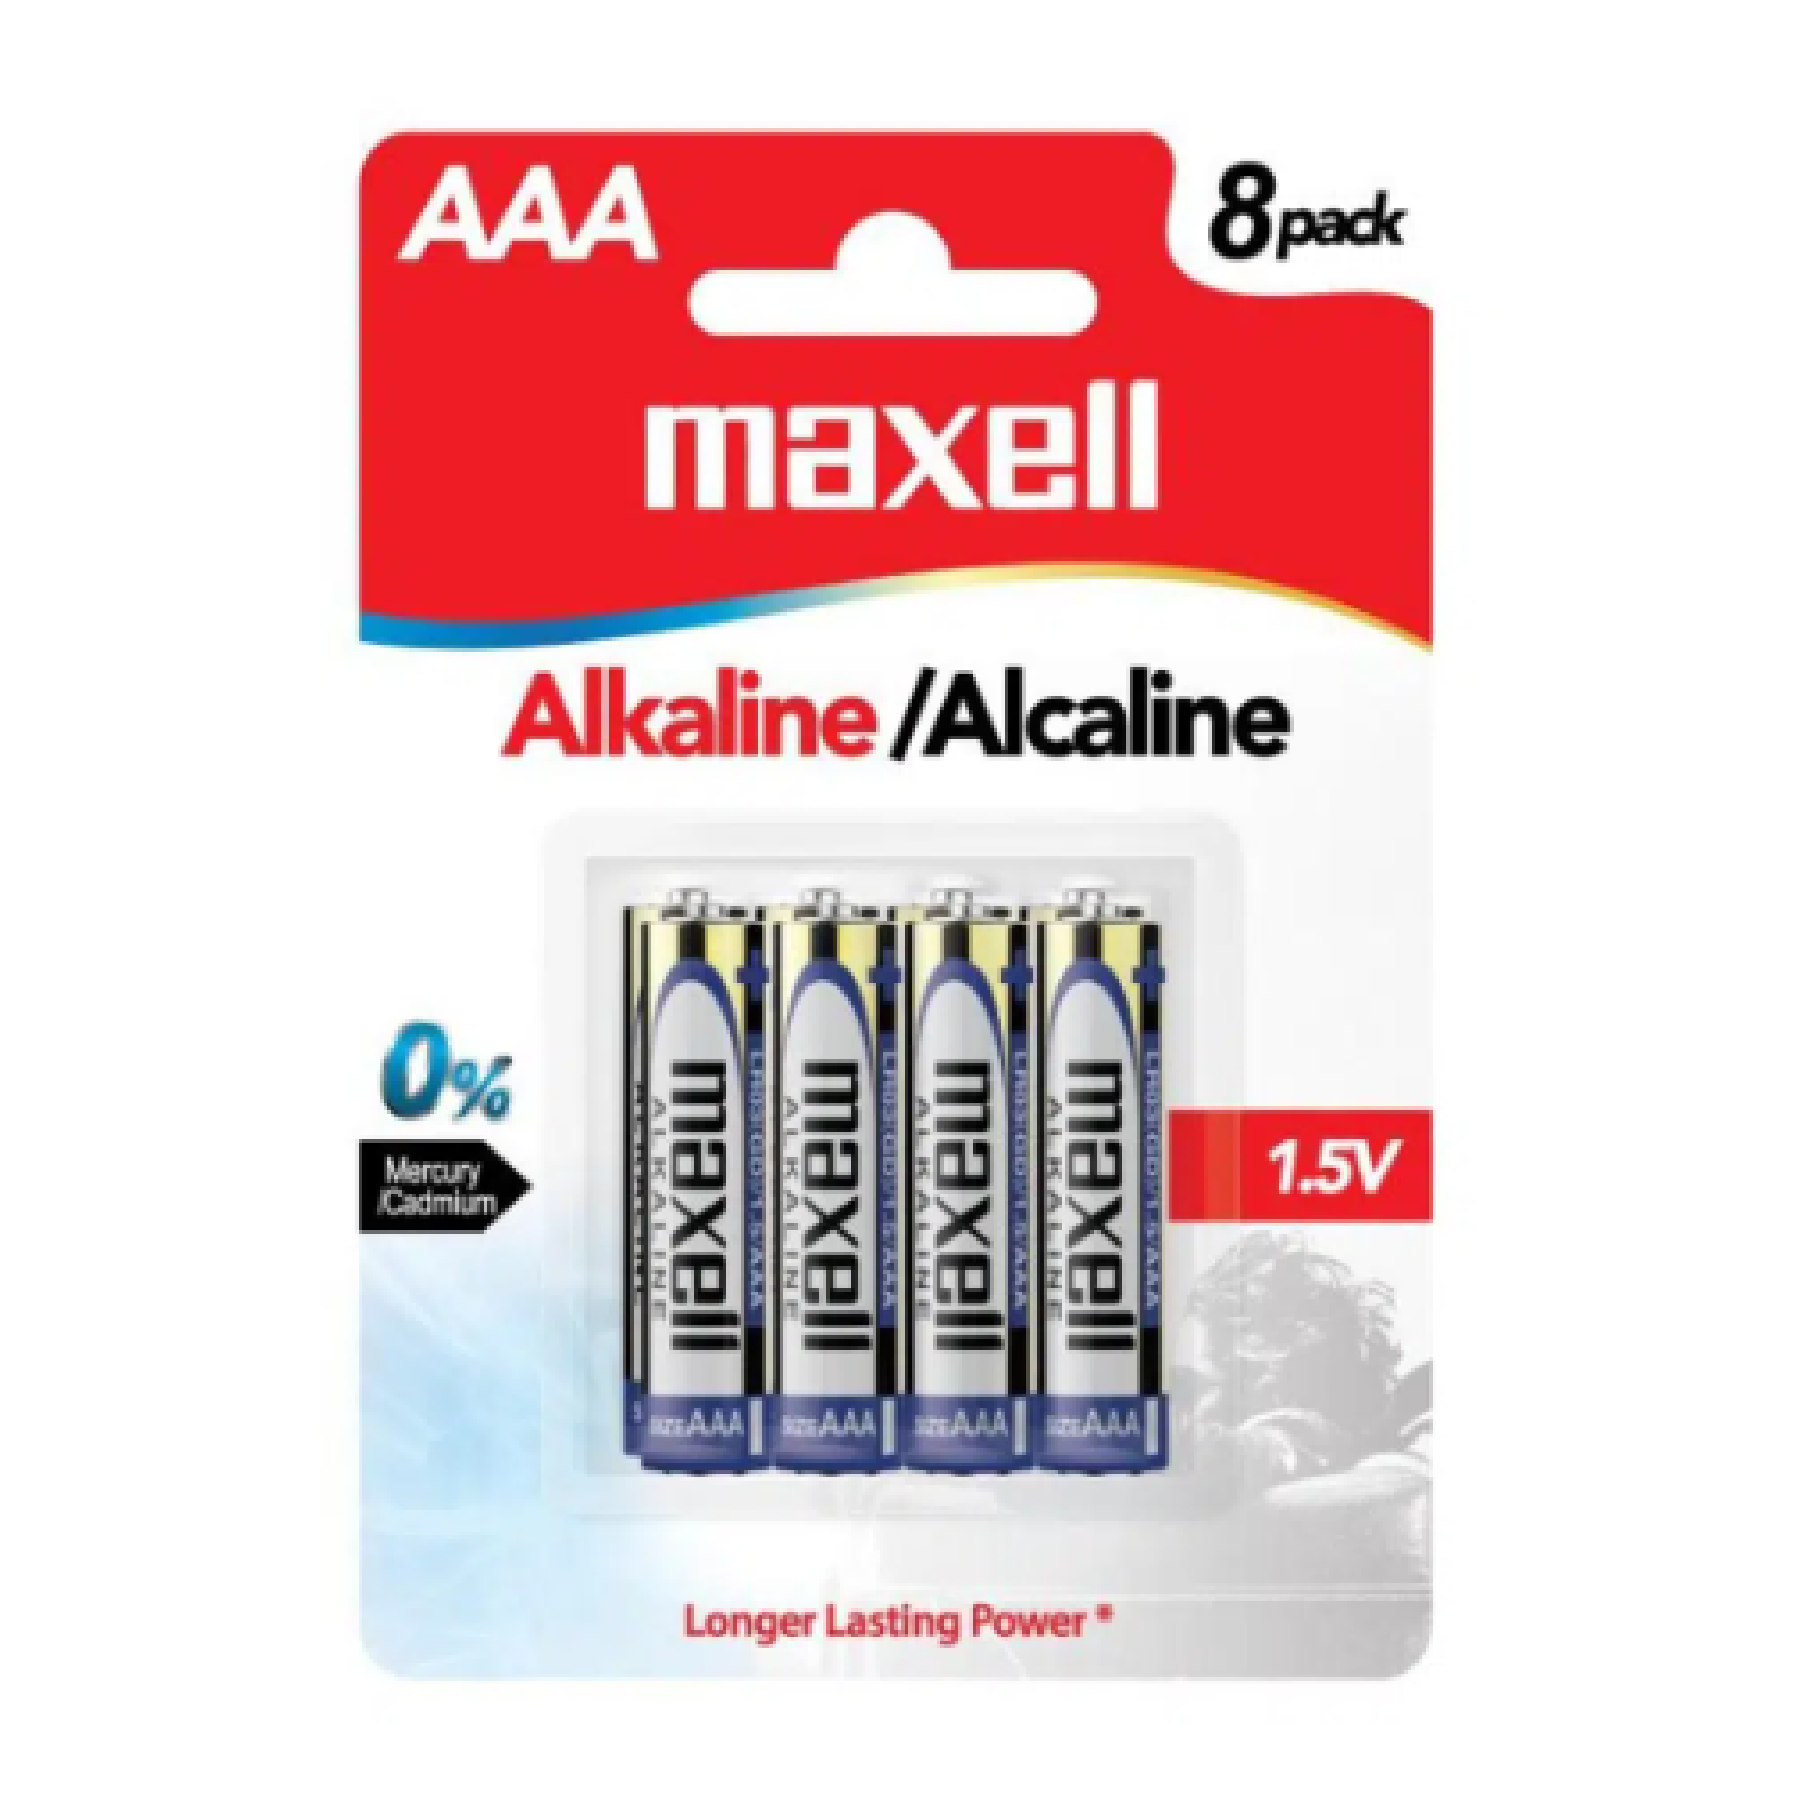 MAXELL AAA Alkaline Battery 8PC/PACK 1.5V Long Lasting